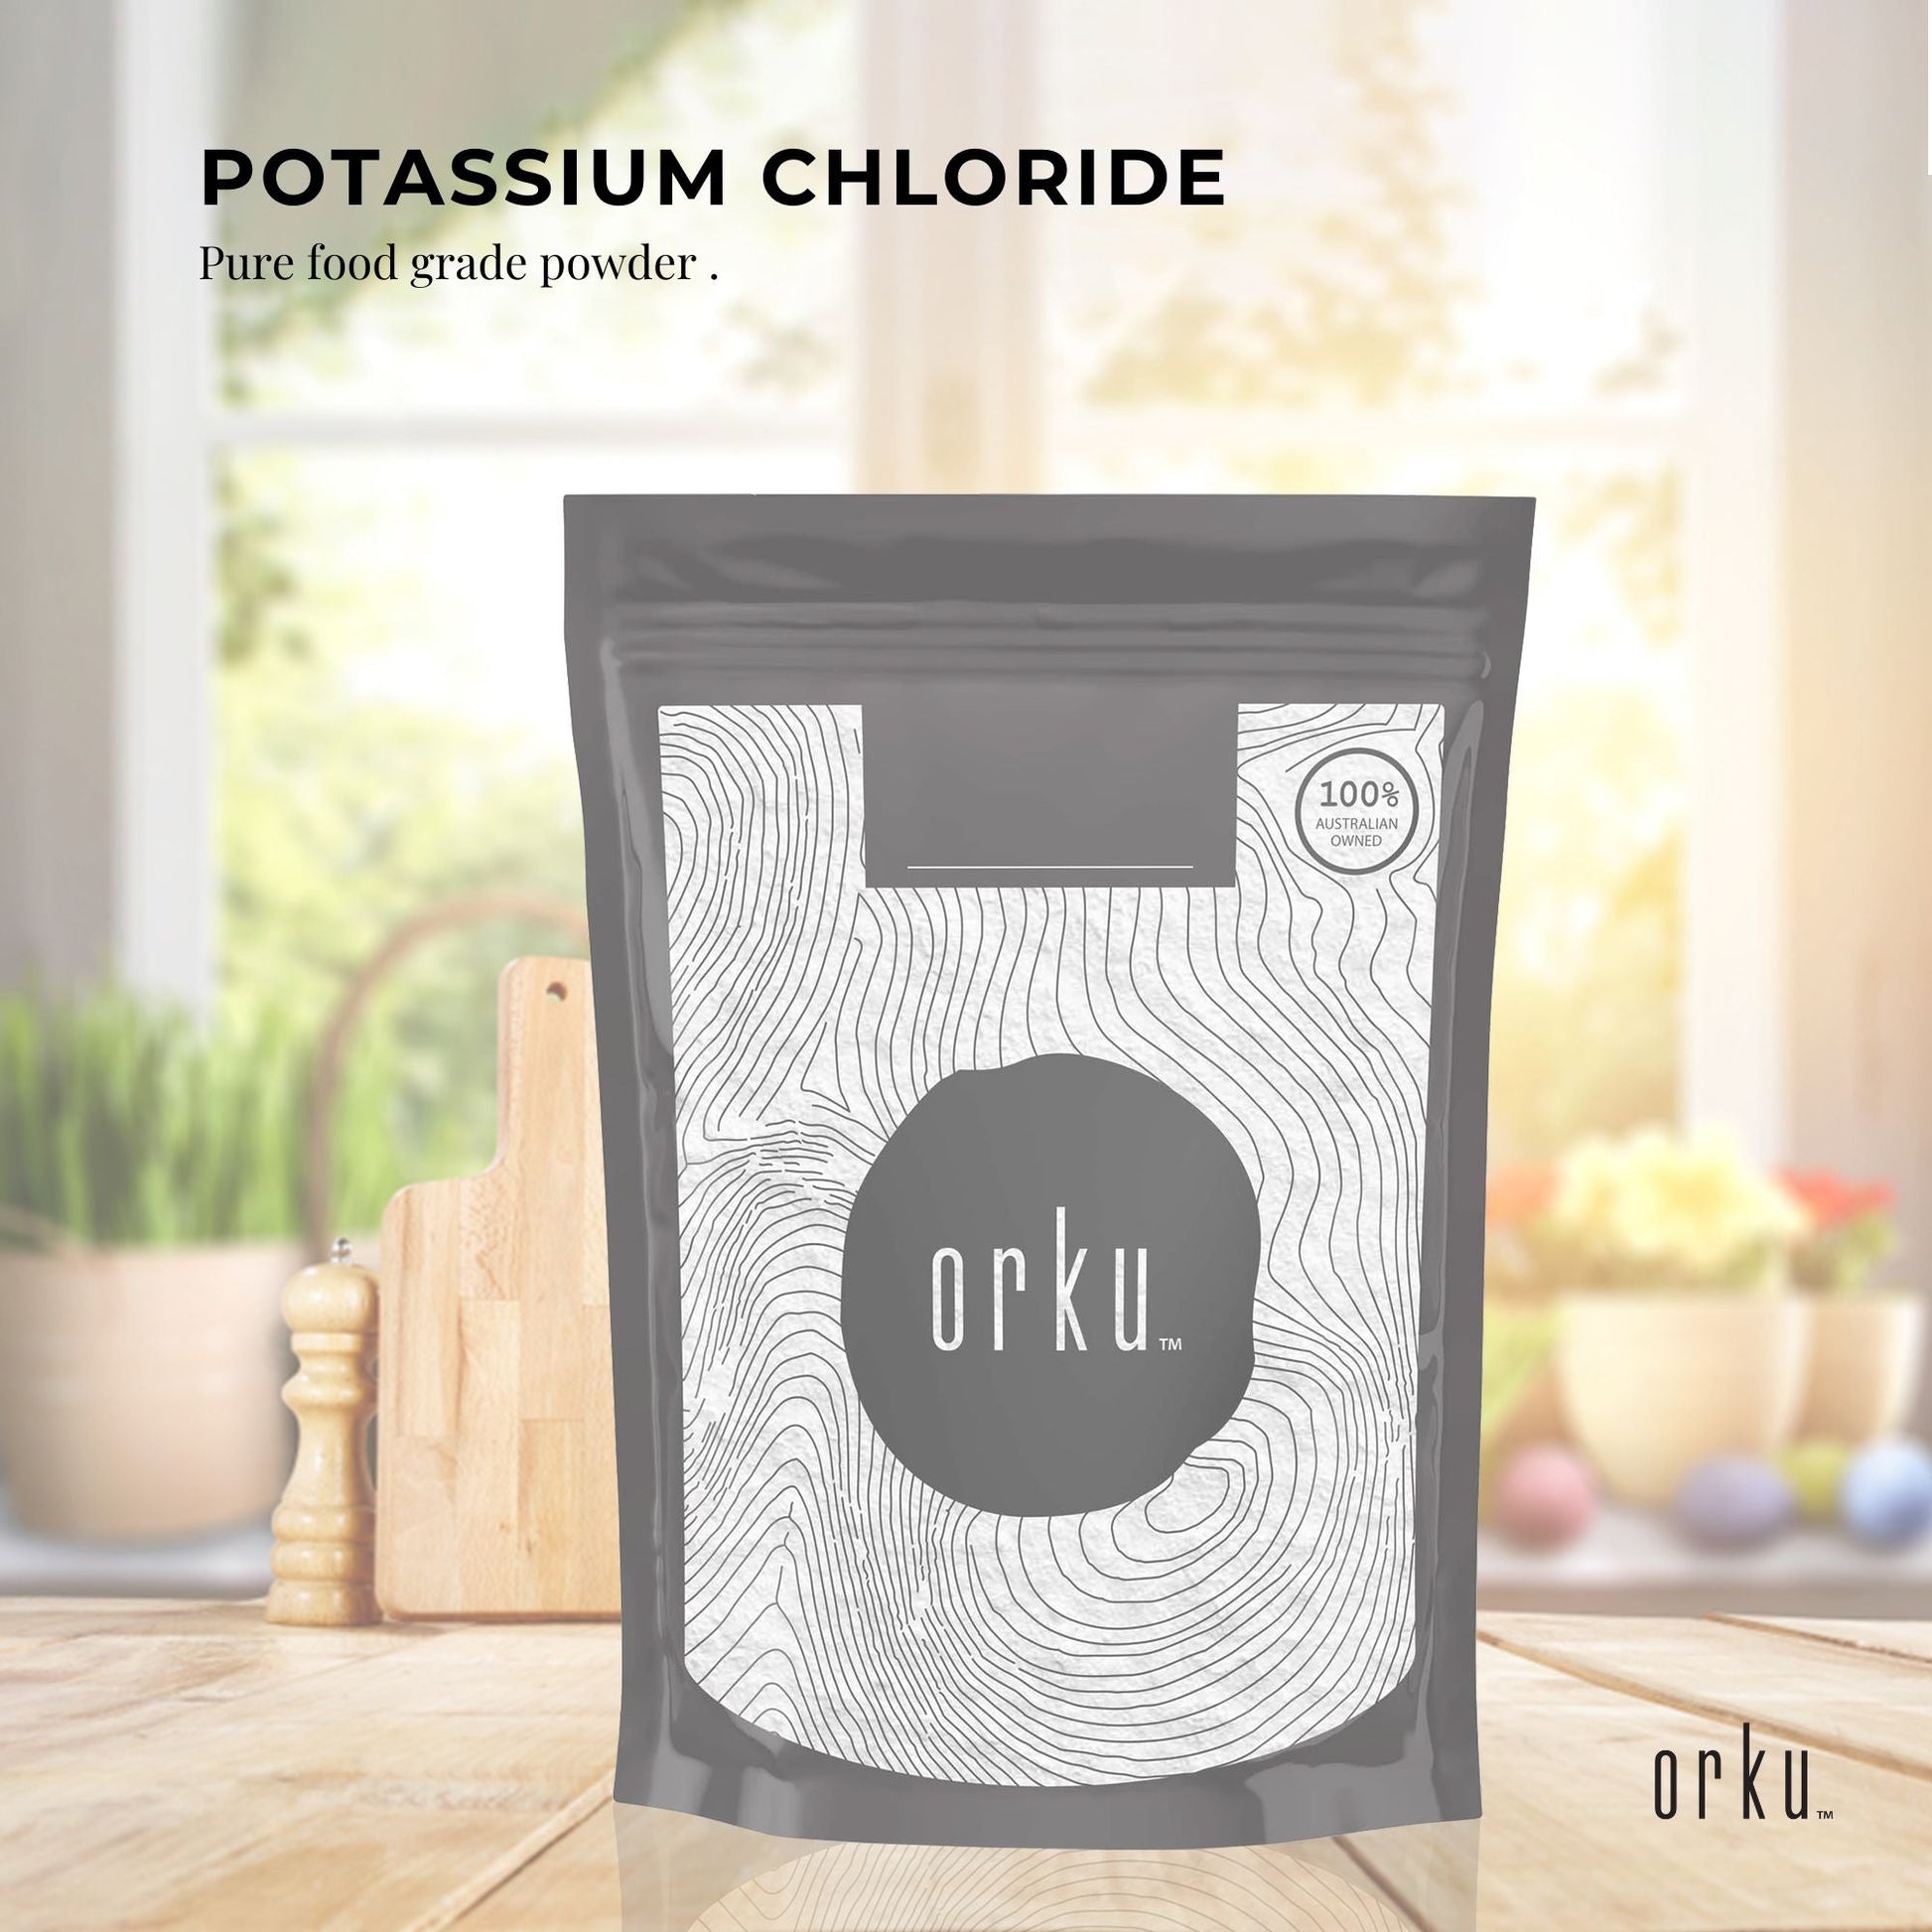 1Kg Potassium Chloride Powder - Pure E508 Food Grade Salt Substitute Supplement